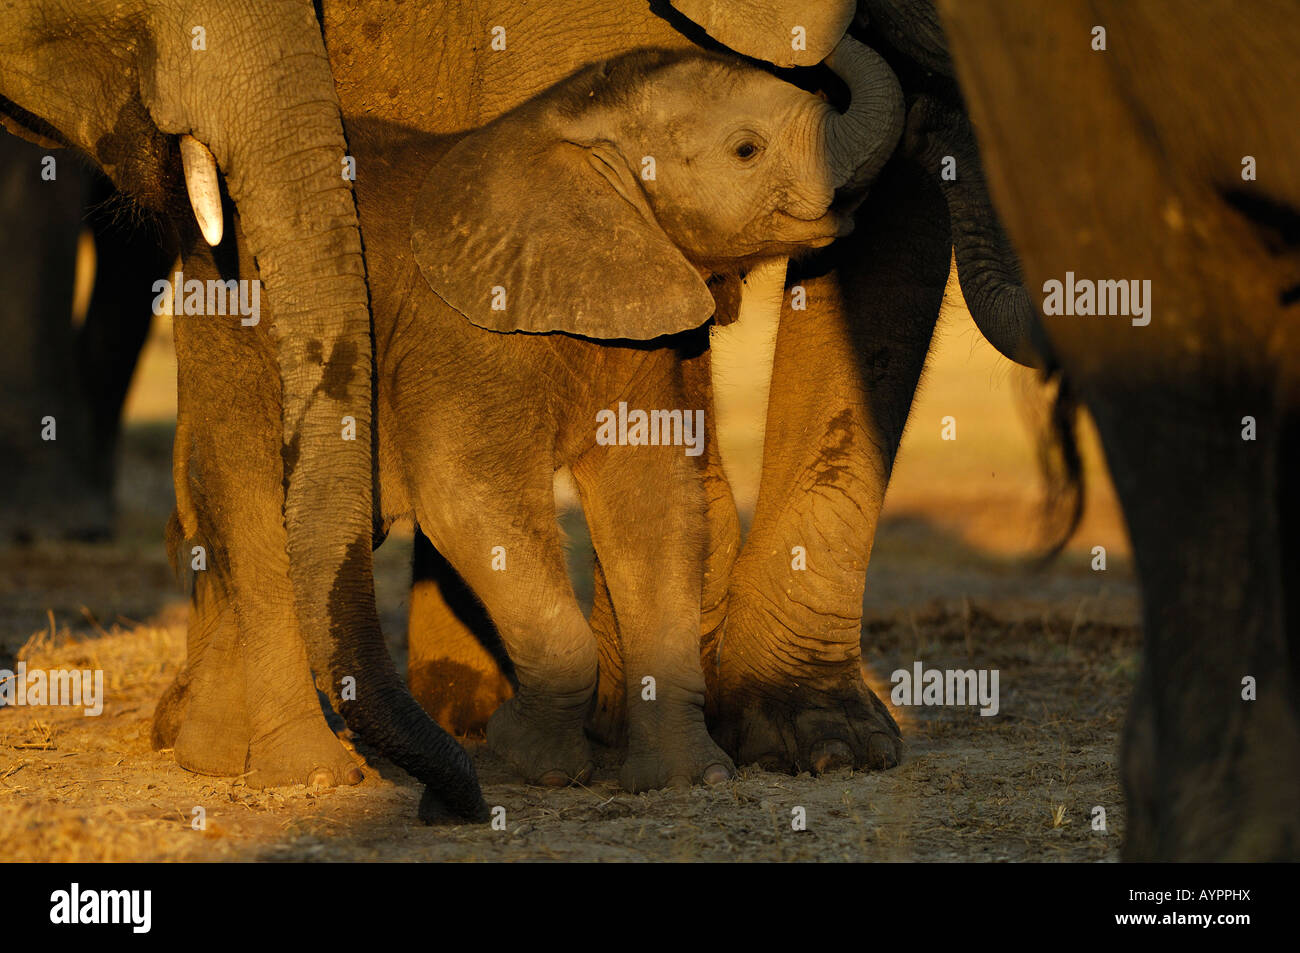 Savanna or African Bush Elephants (Loxodonta africana), calf protected by herd, Chobe National Park, Botswana, Africa Stock Photo